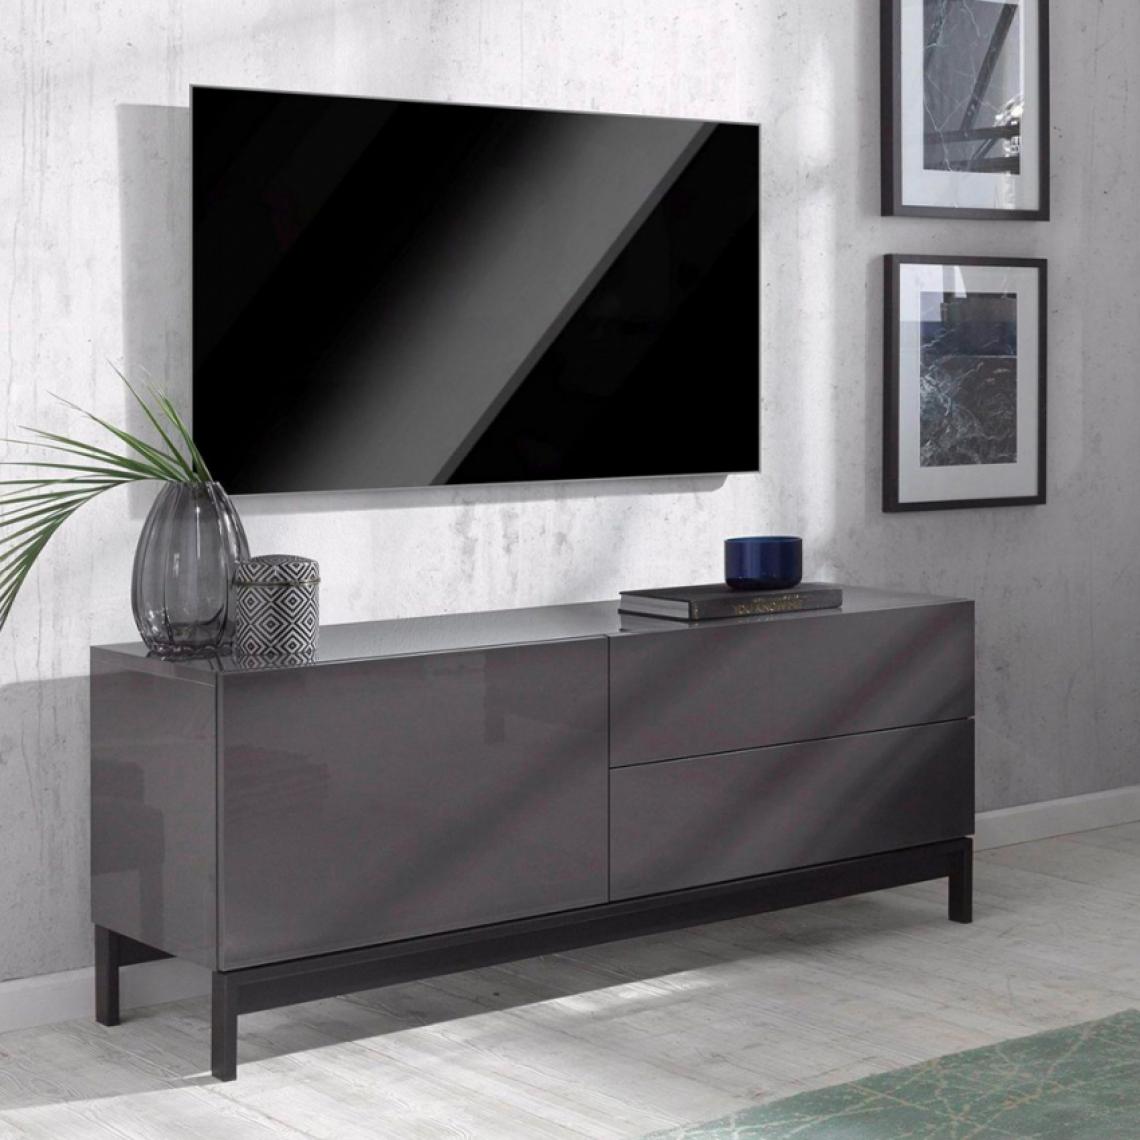 Ahd Amazing Home Design - Meuble TV Salon Compartiment 2 Tiroirs Anthracite Brillant Metis Up Report - Meubles TV, Hi-Fi